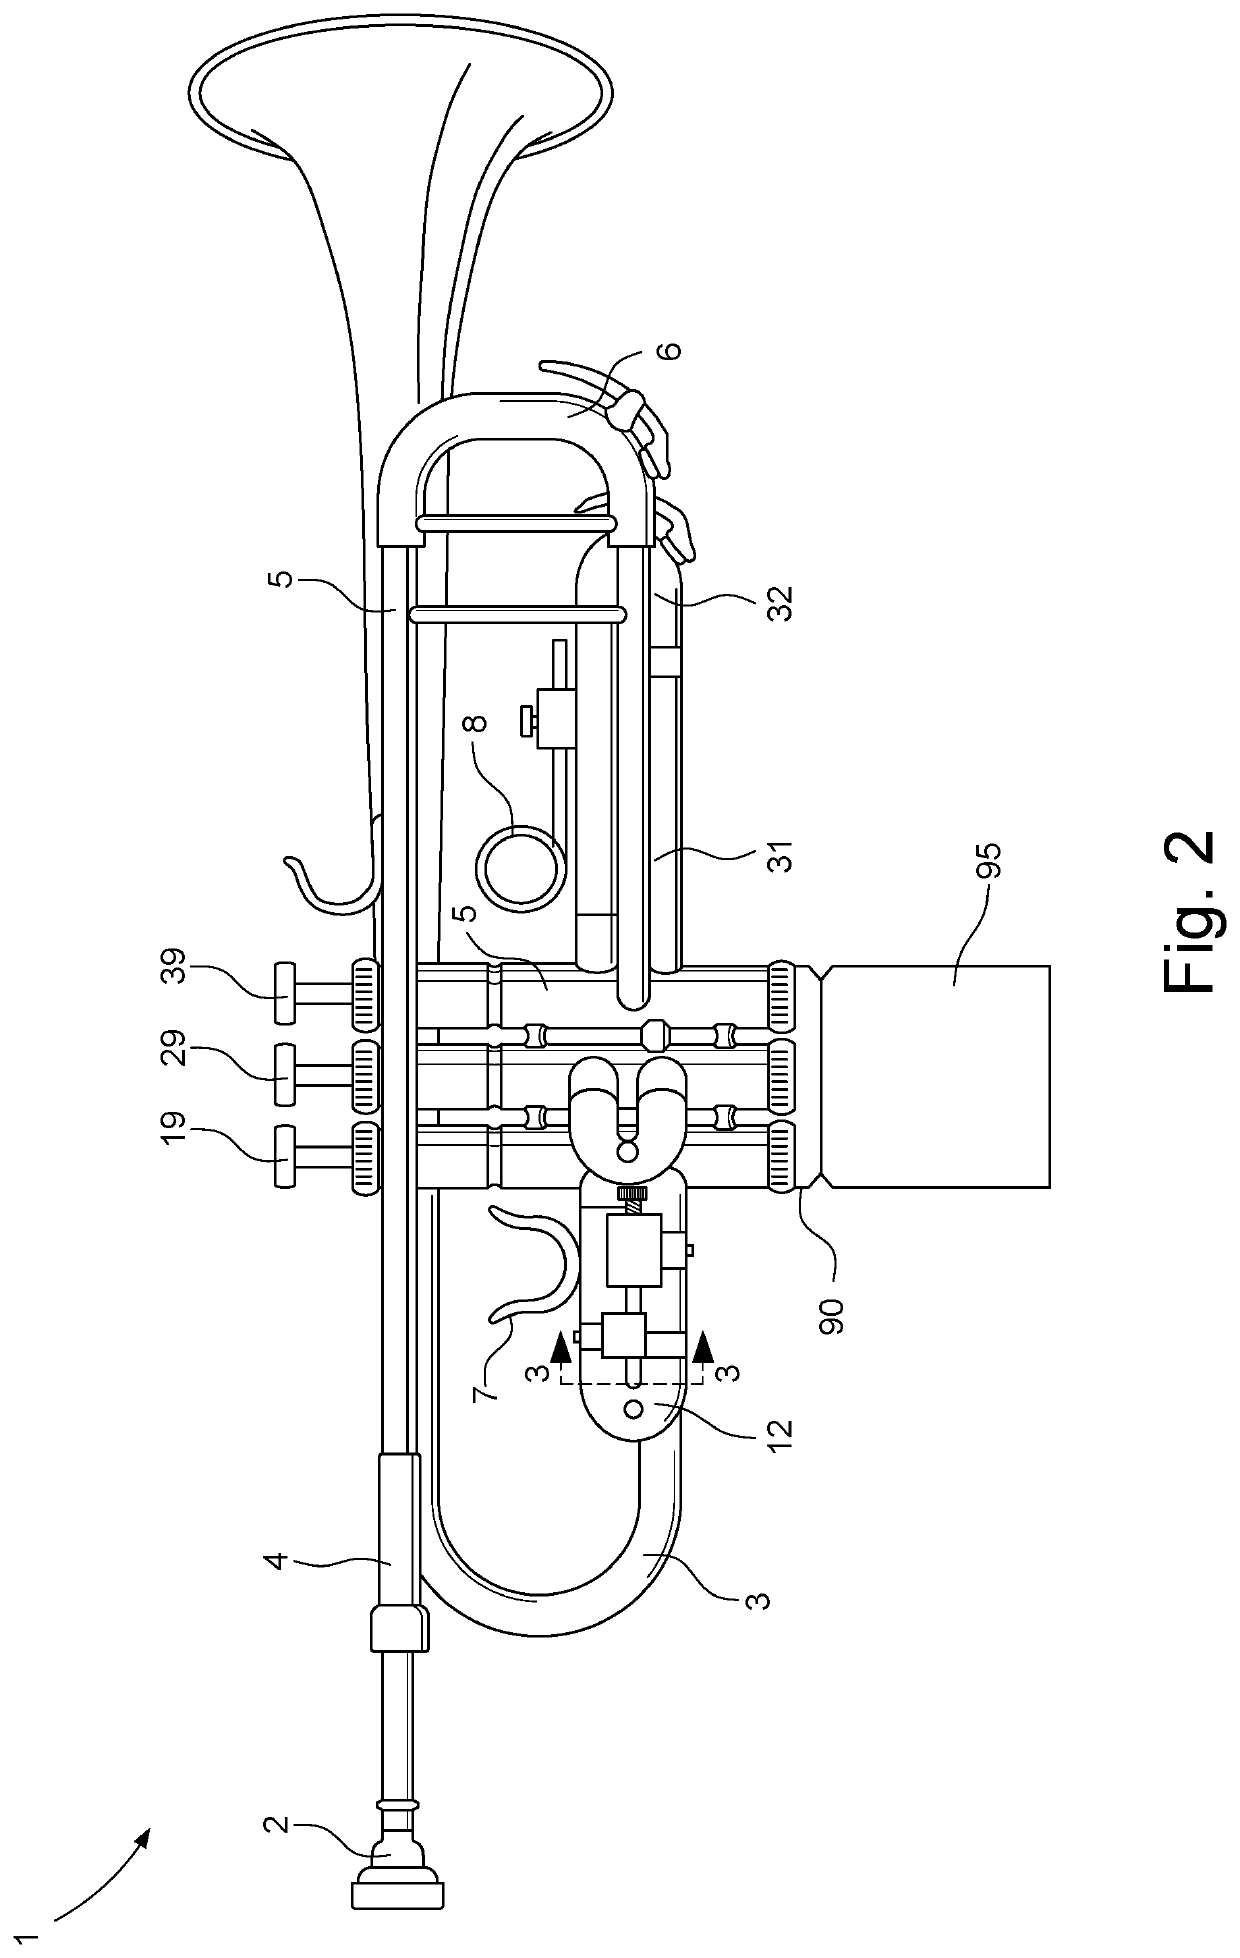 Pitch adjustment for a valve brass musical instrument